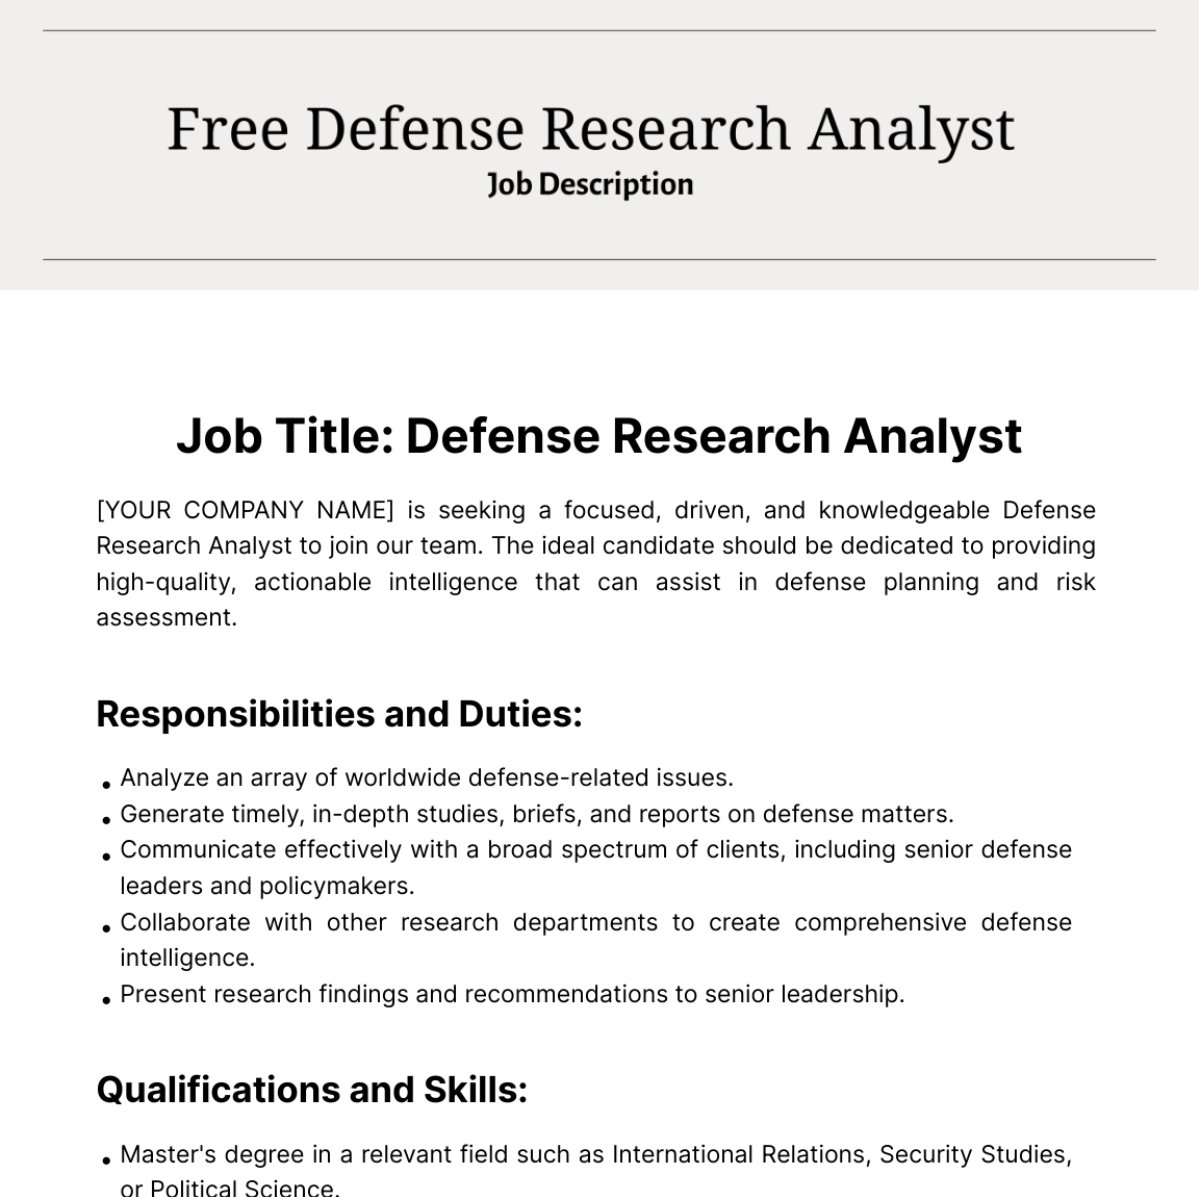 Free Defense Research Analyst Job Description Template